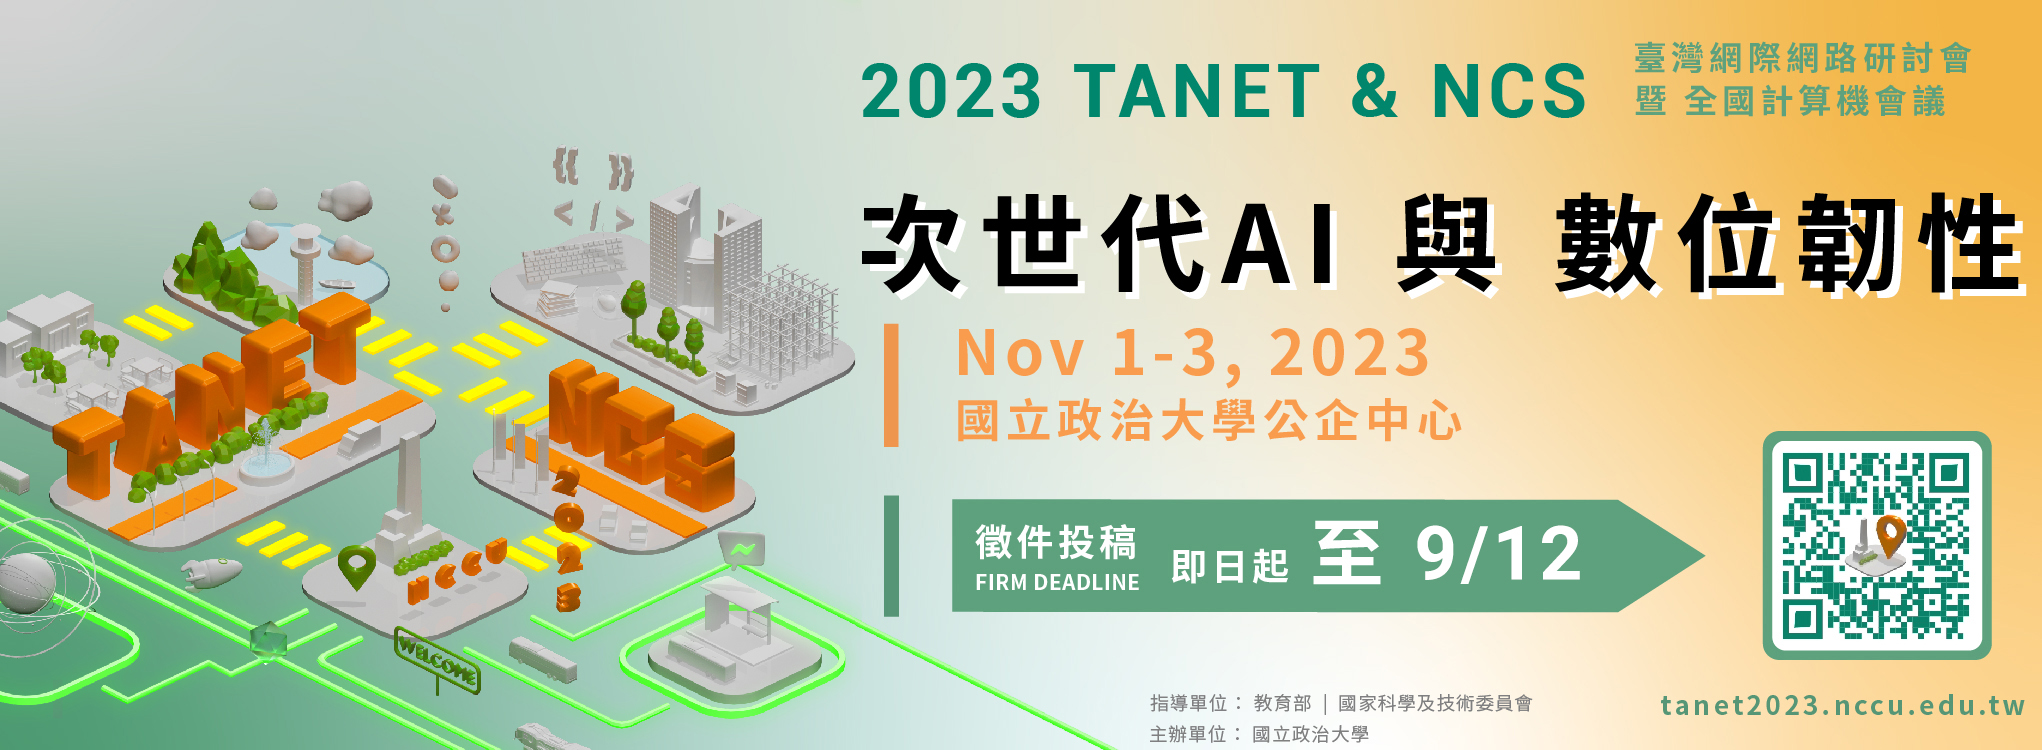 2023 TANET & NCS會議 投稿截止日延長至9/12